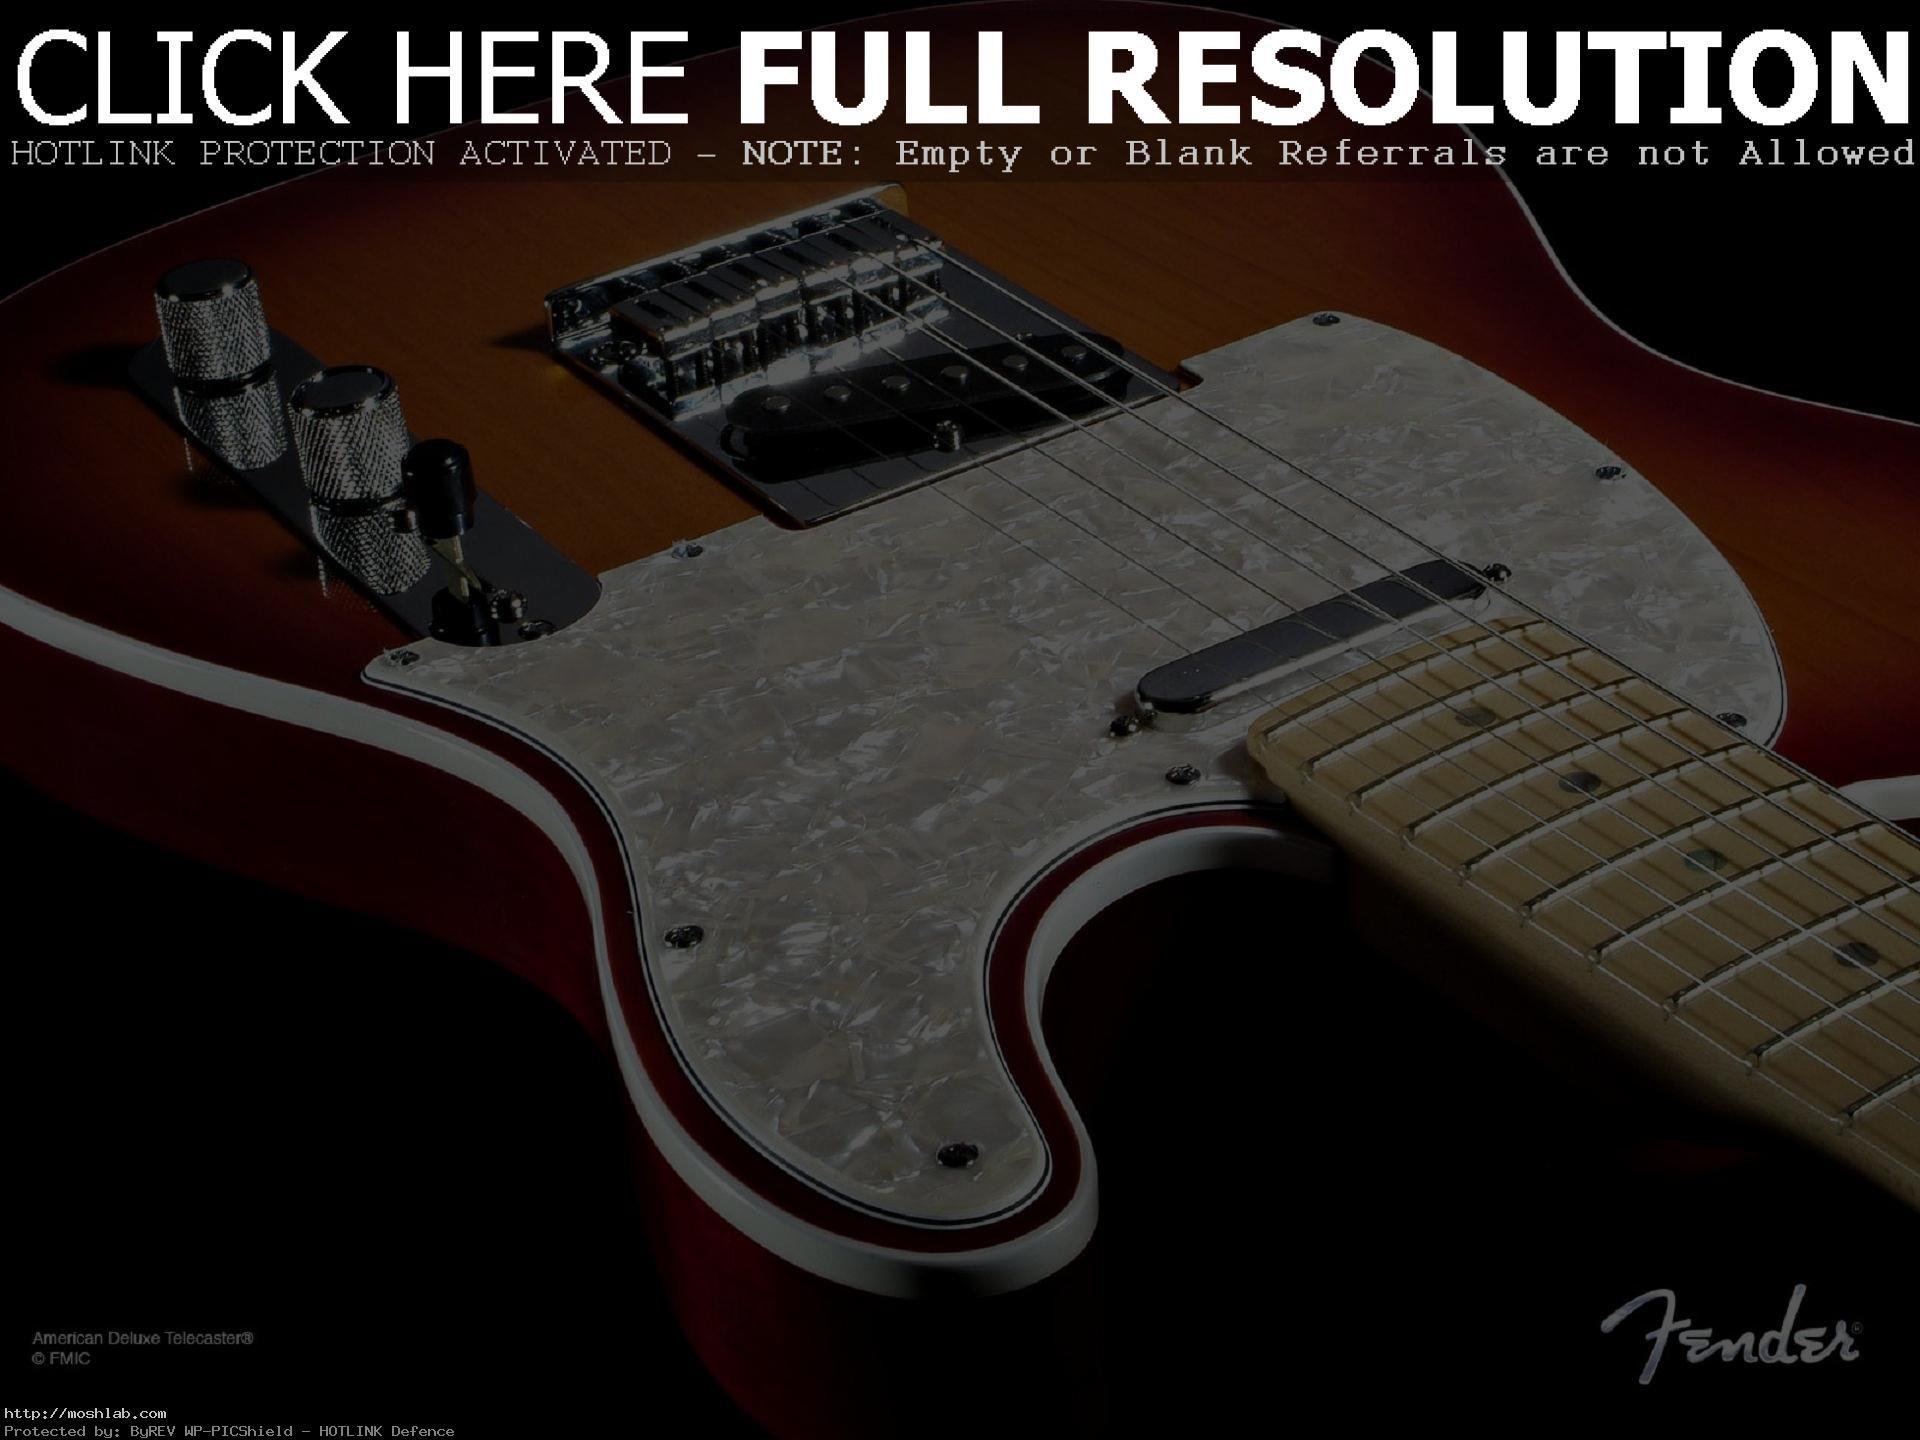 1920x1440 Fender Guitar Wallpaper Photo For Desktop Wallpaper 1920 x 1440 px 830.77  KB red gibson black